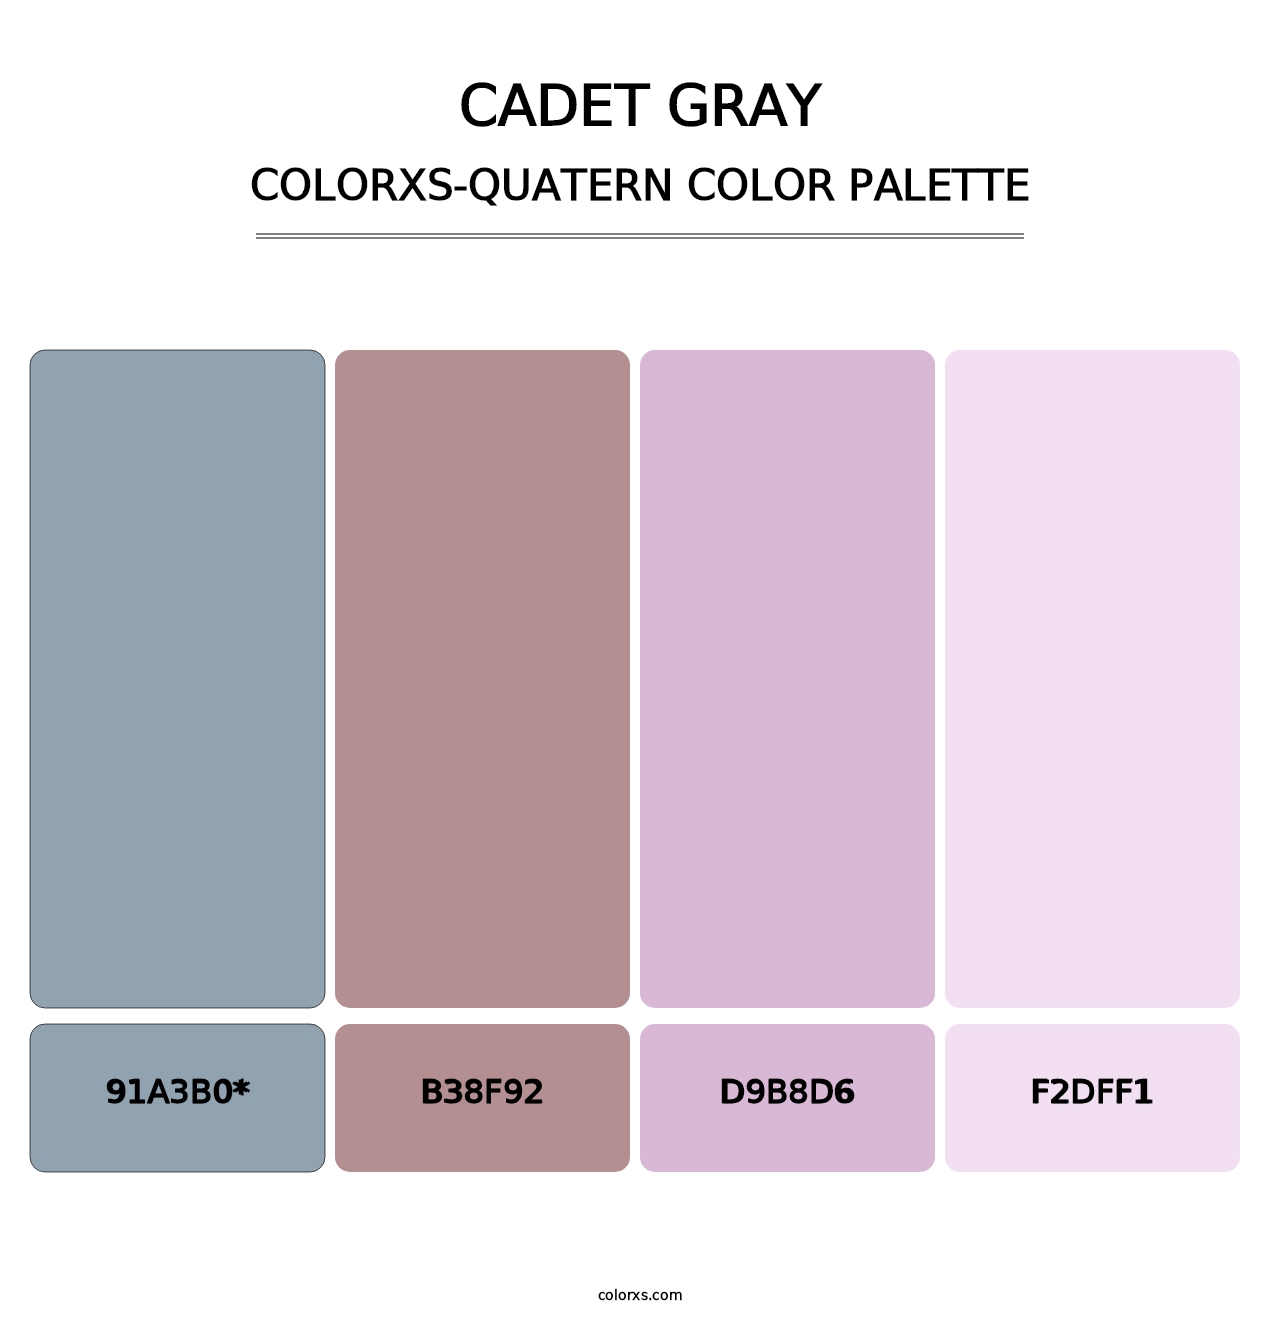 Cadet Gray - Colorxs Quatern Palette